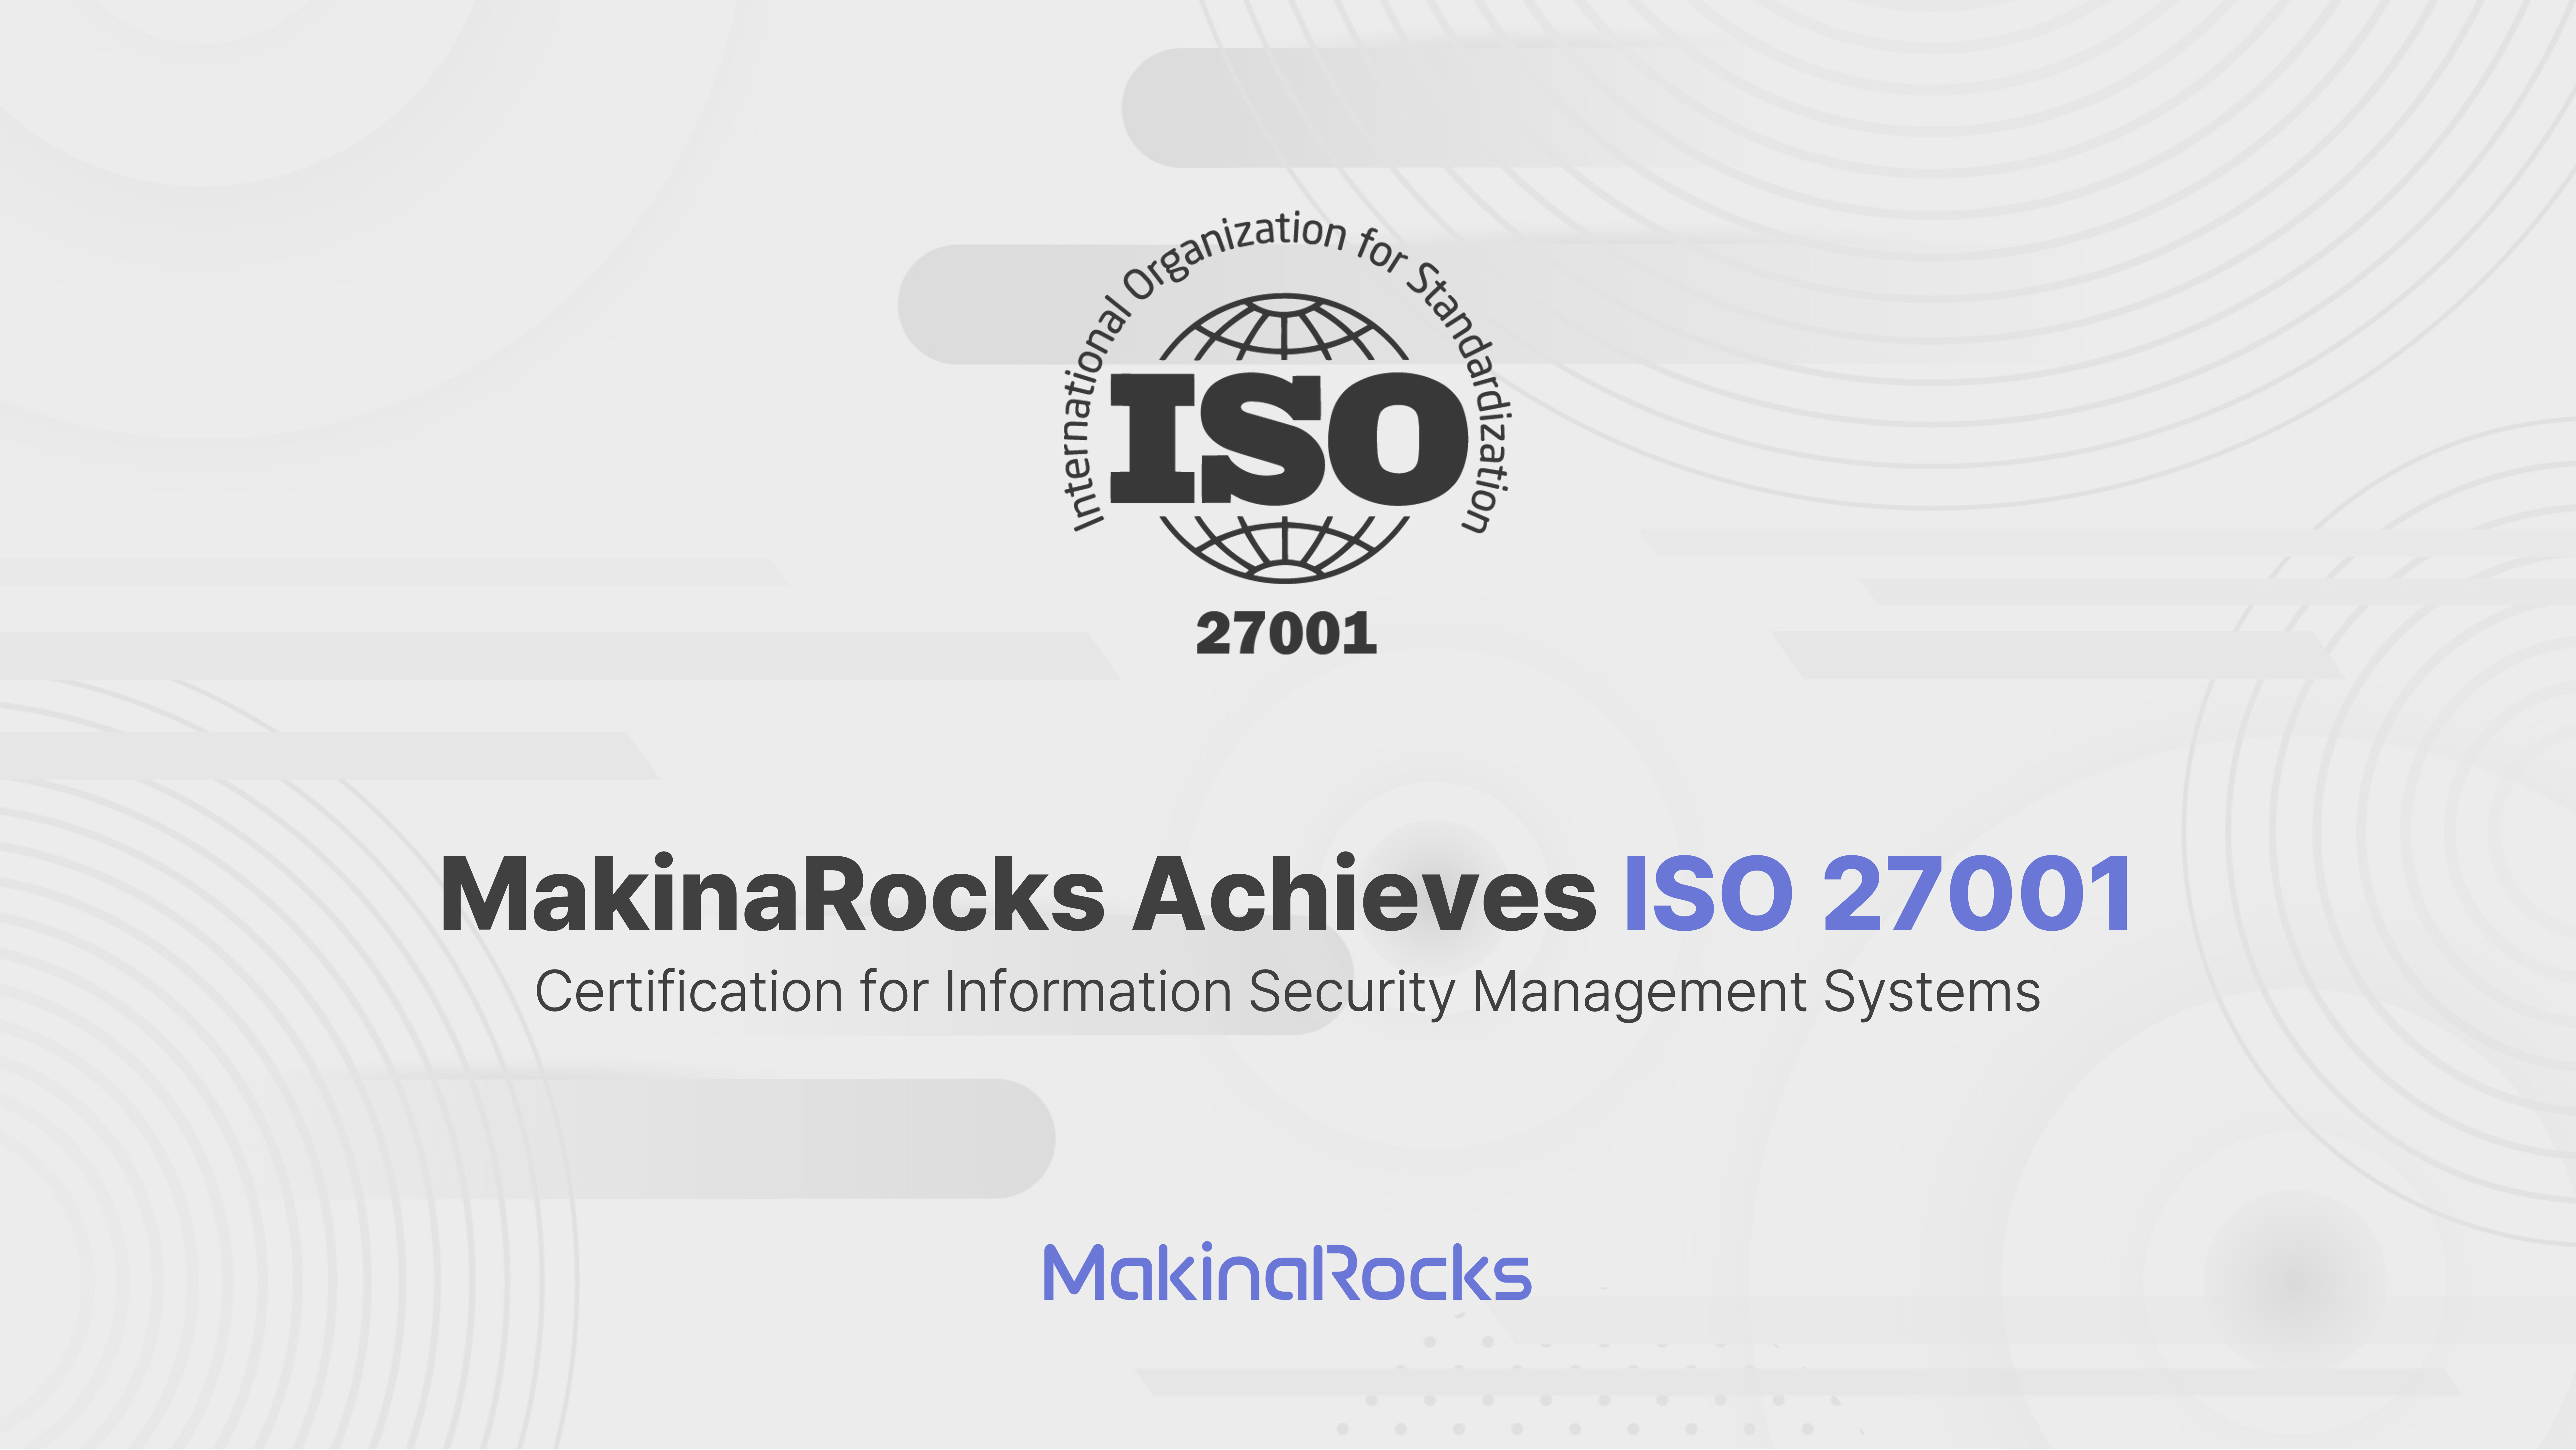 [Image2] MakinaRocks achives ISO 27001_16x9